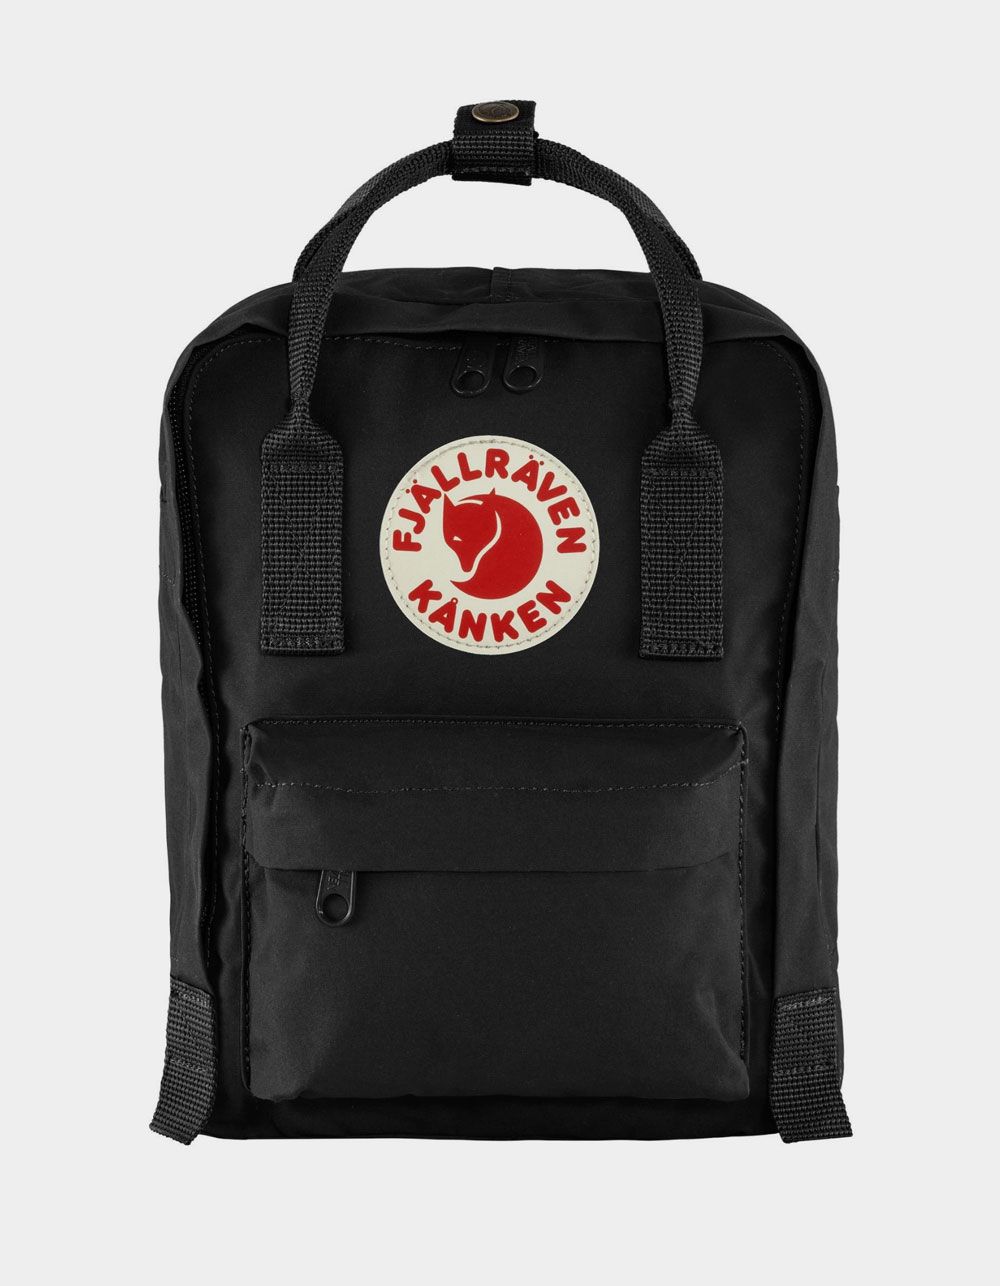 FJALLRAVEN Kånken Mini Backpack | Tillys